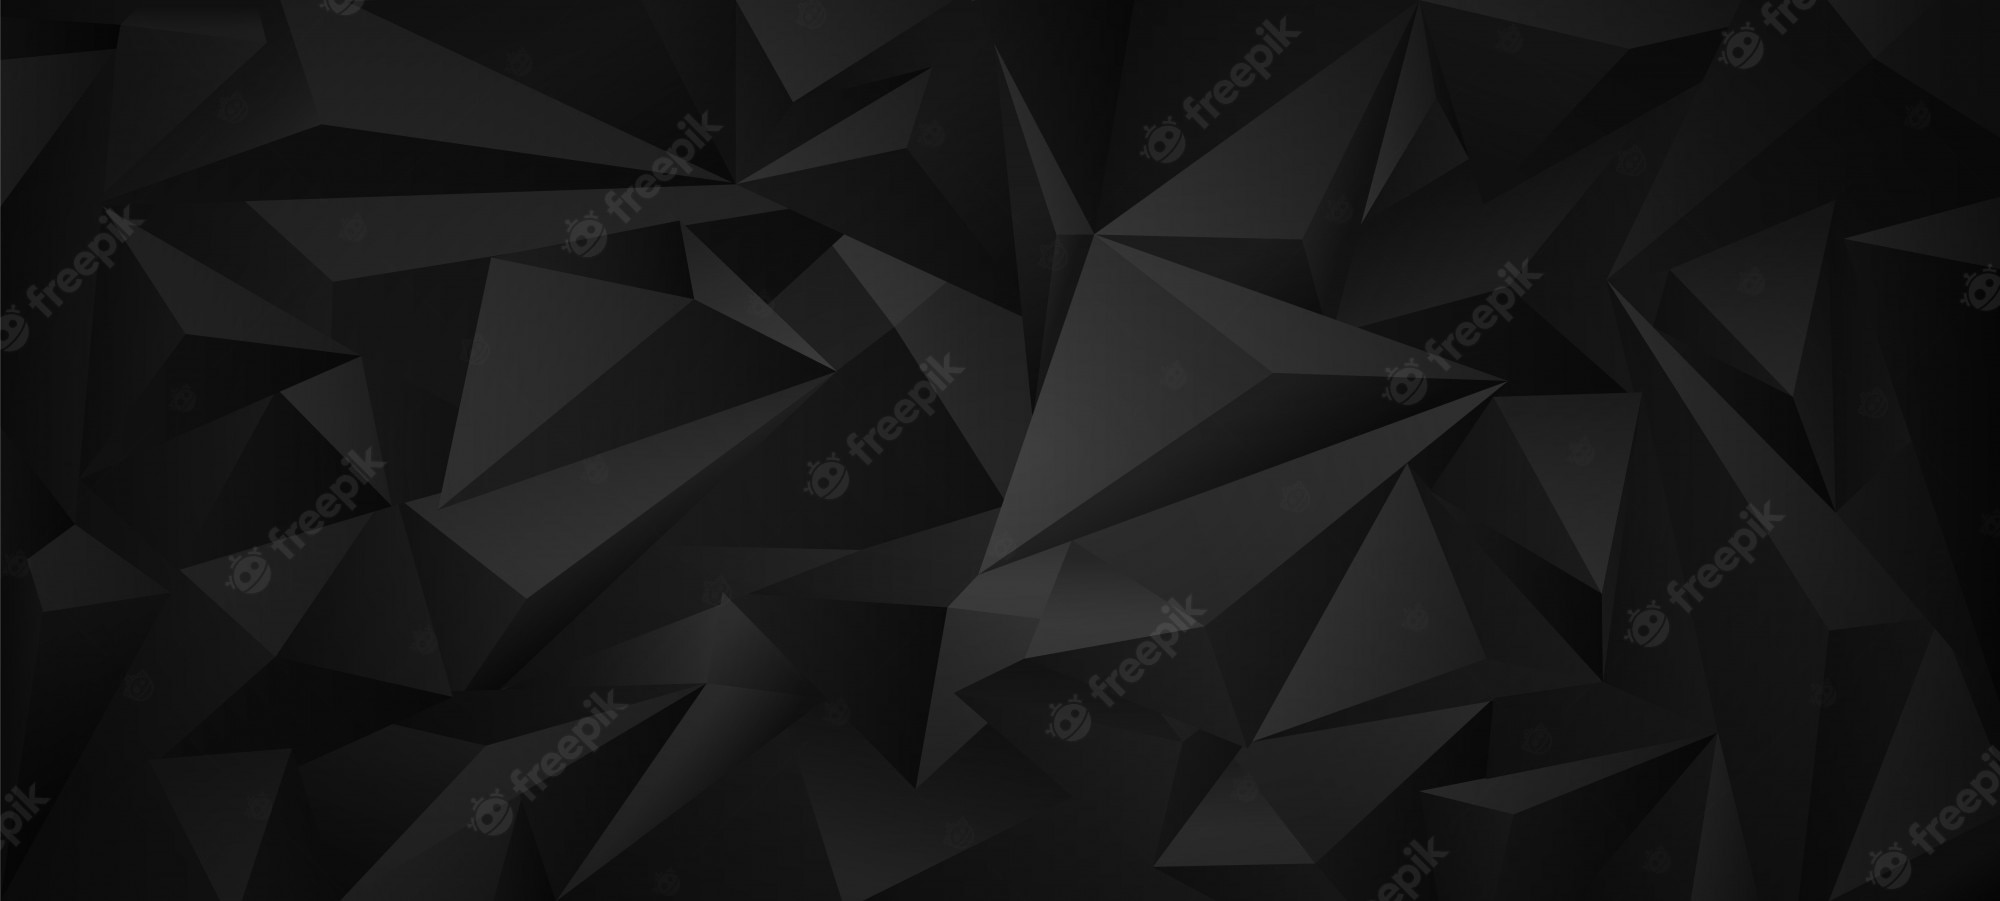 Black Graphic Background